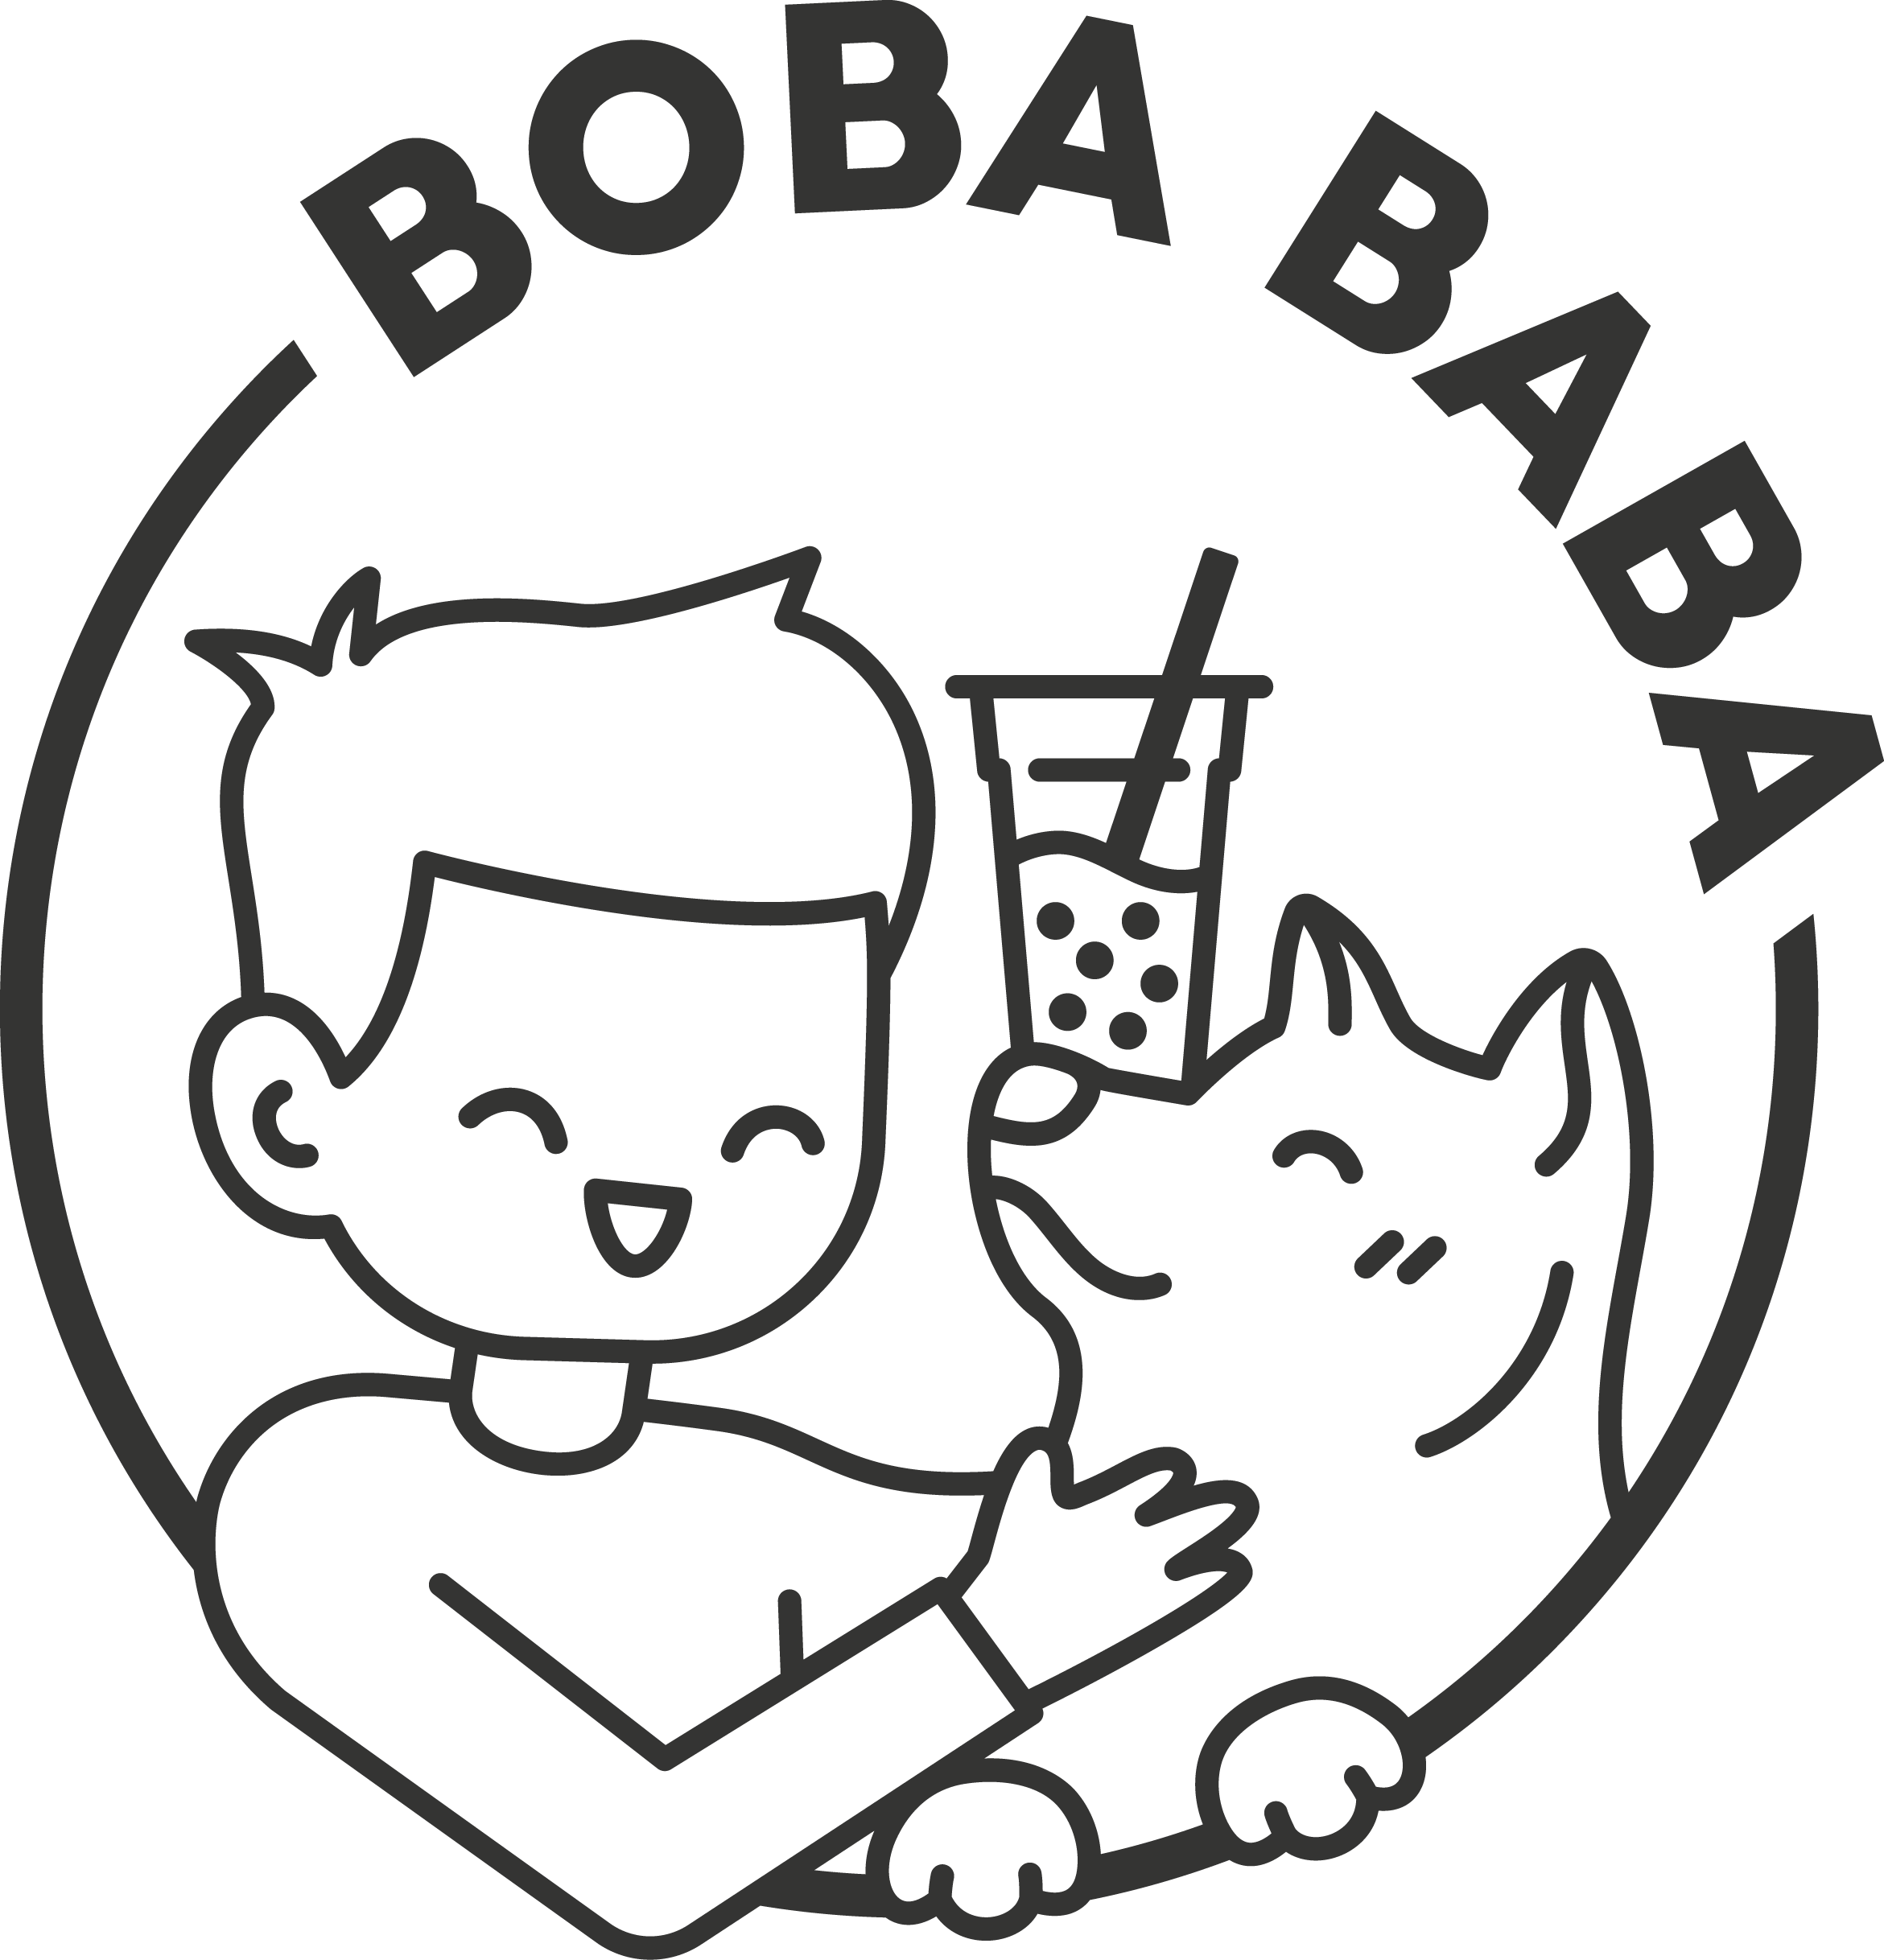 Boba Baba